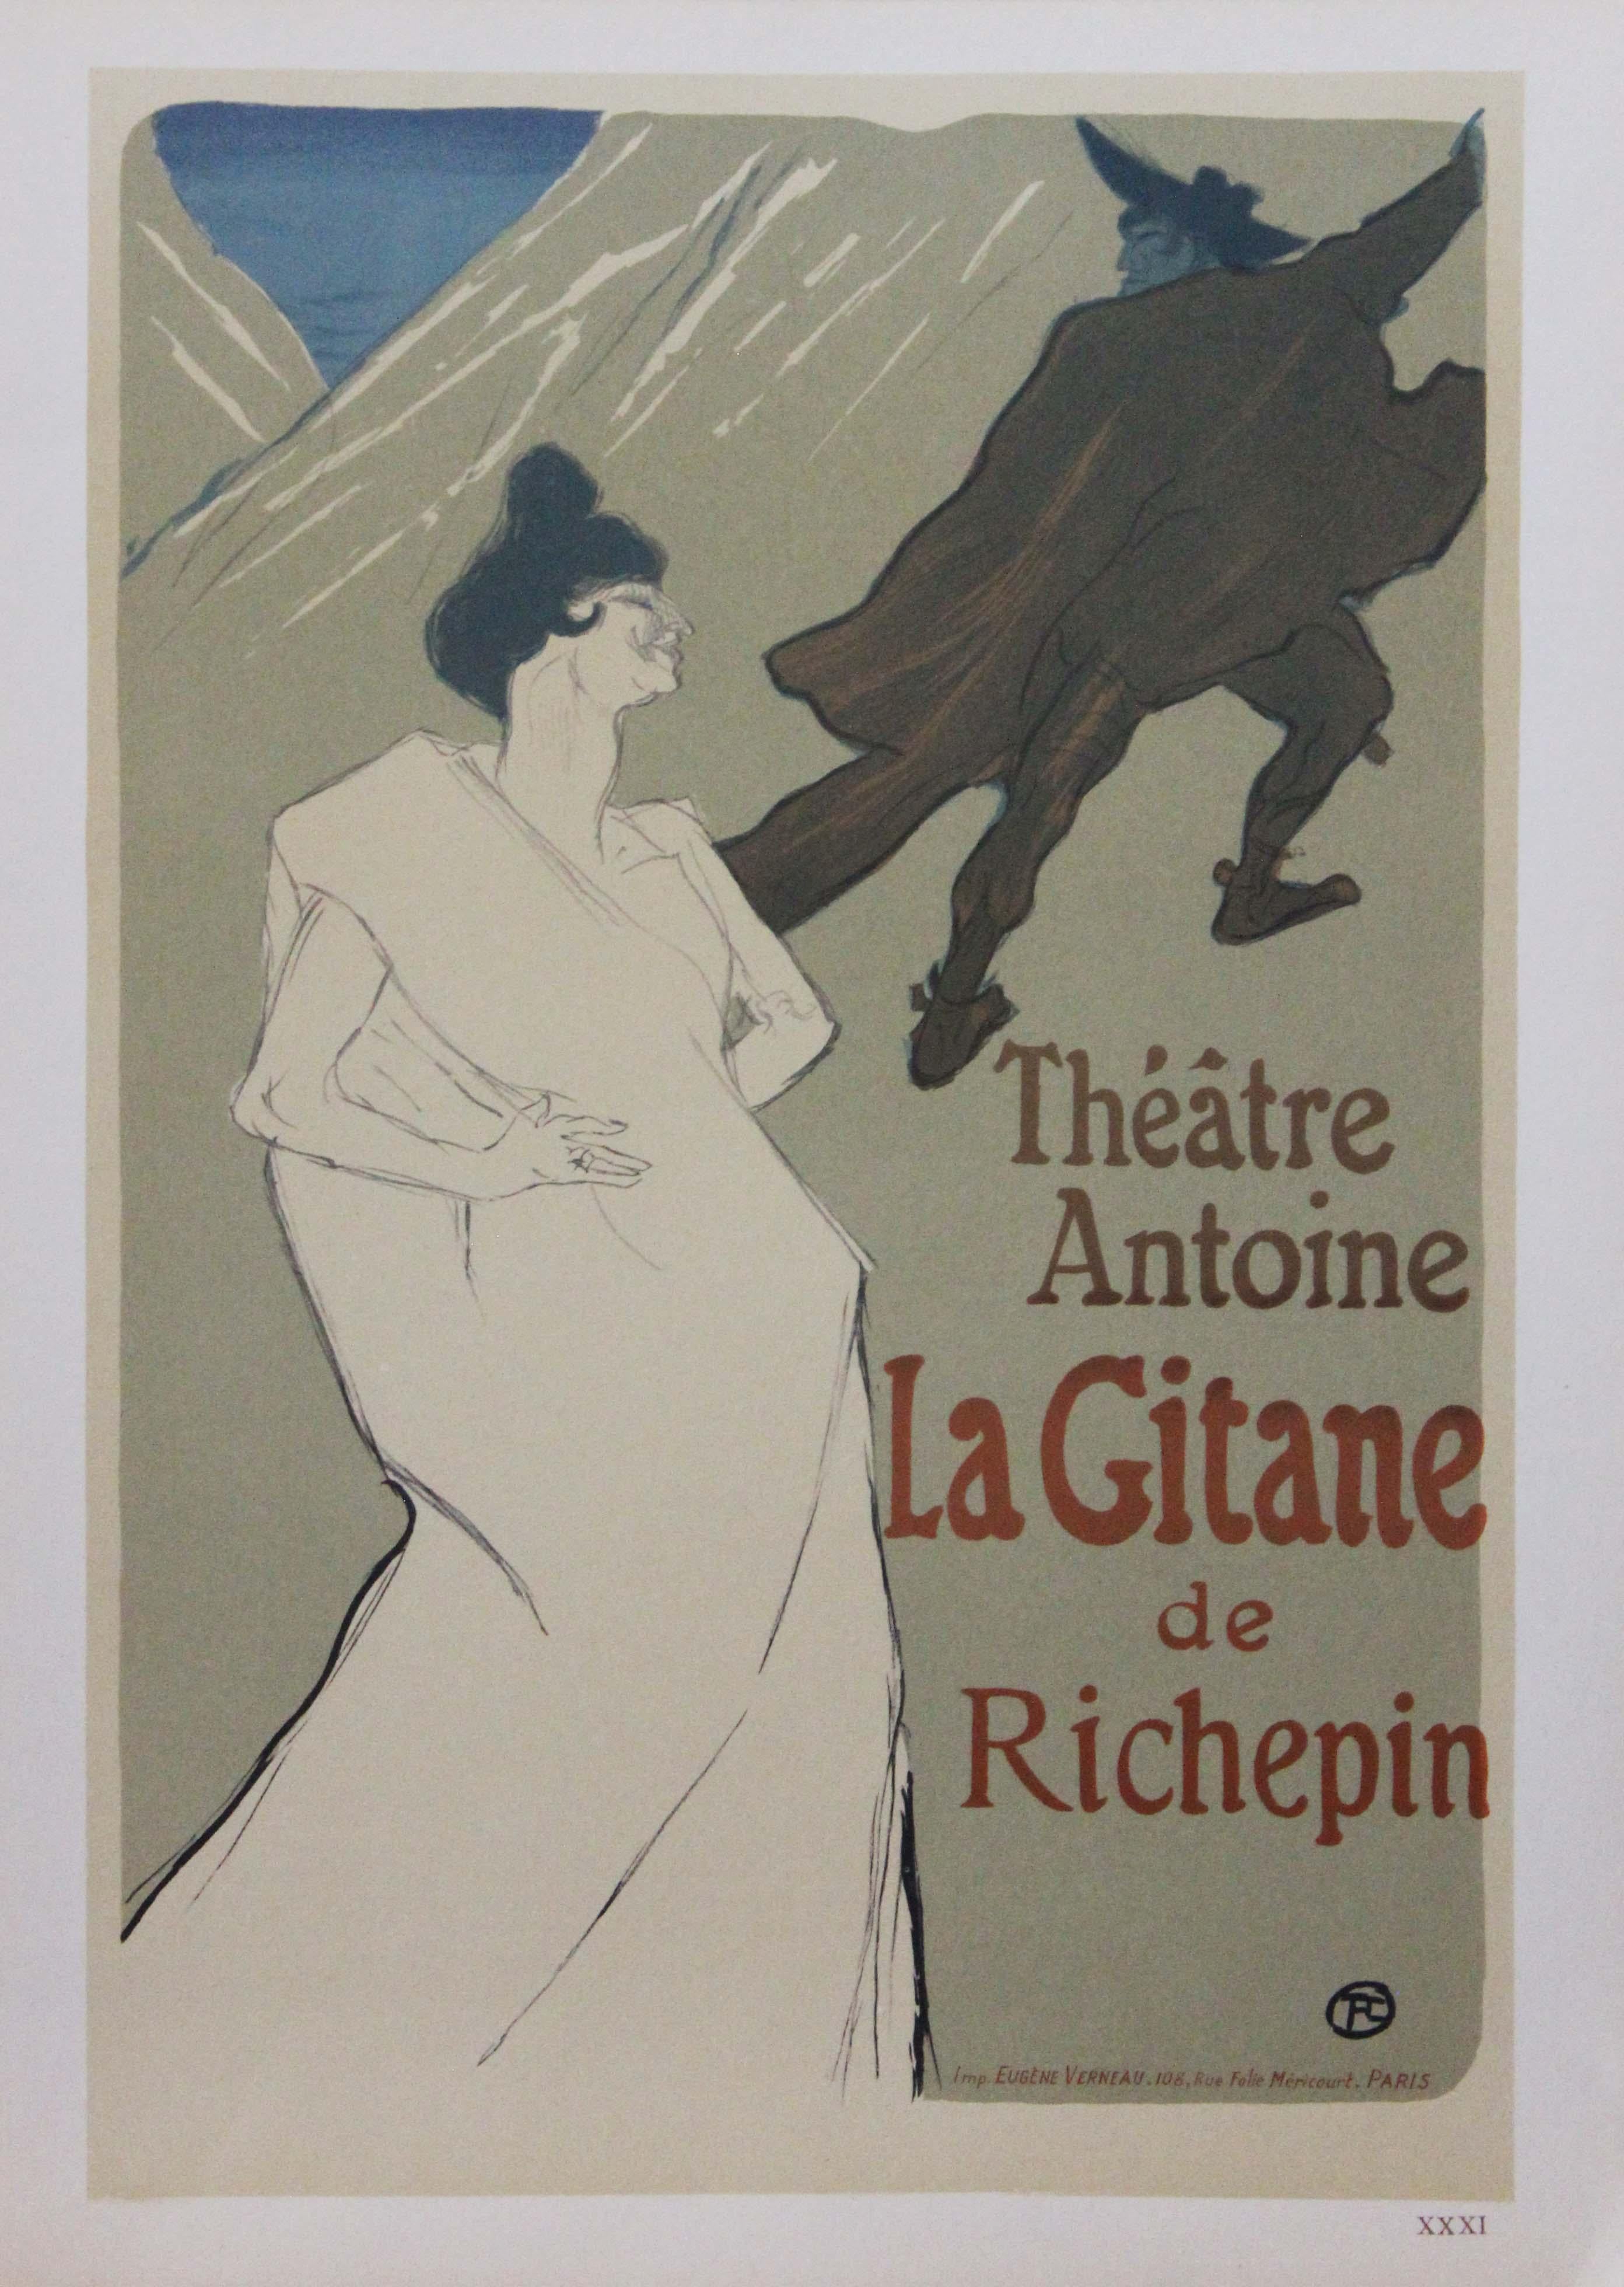 Henri de Toulouse-Lautrec Print - "La Gitane de Richepin" Lithograph XXXI